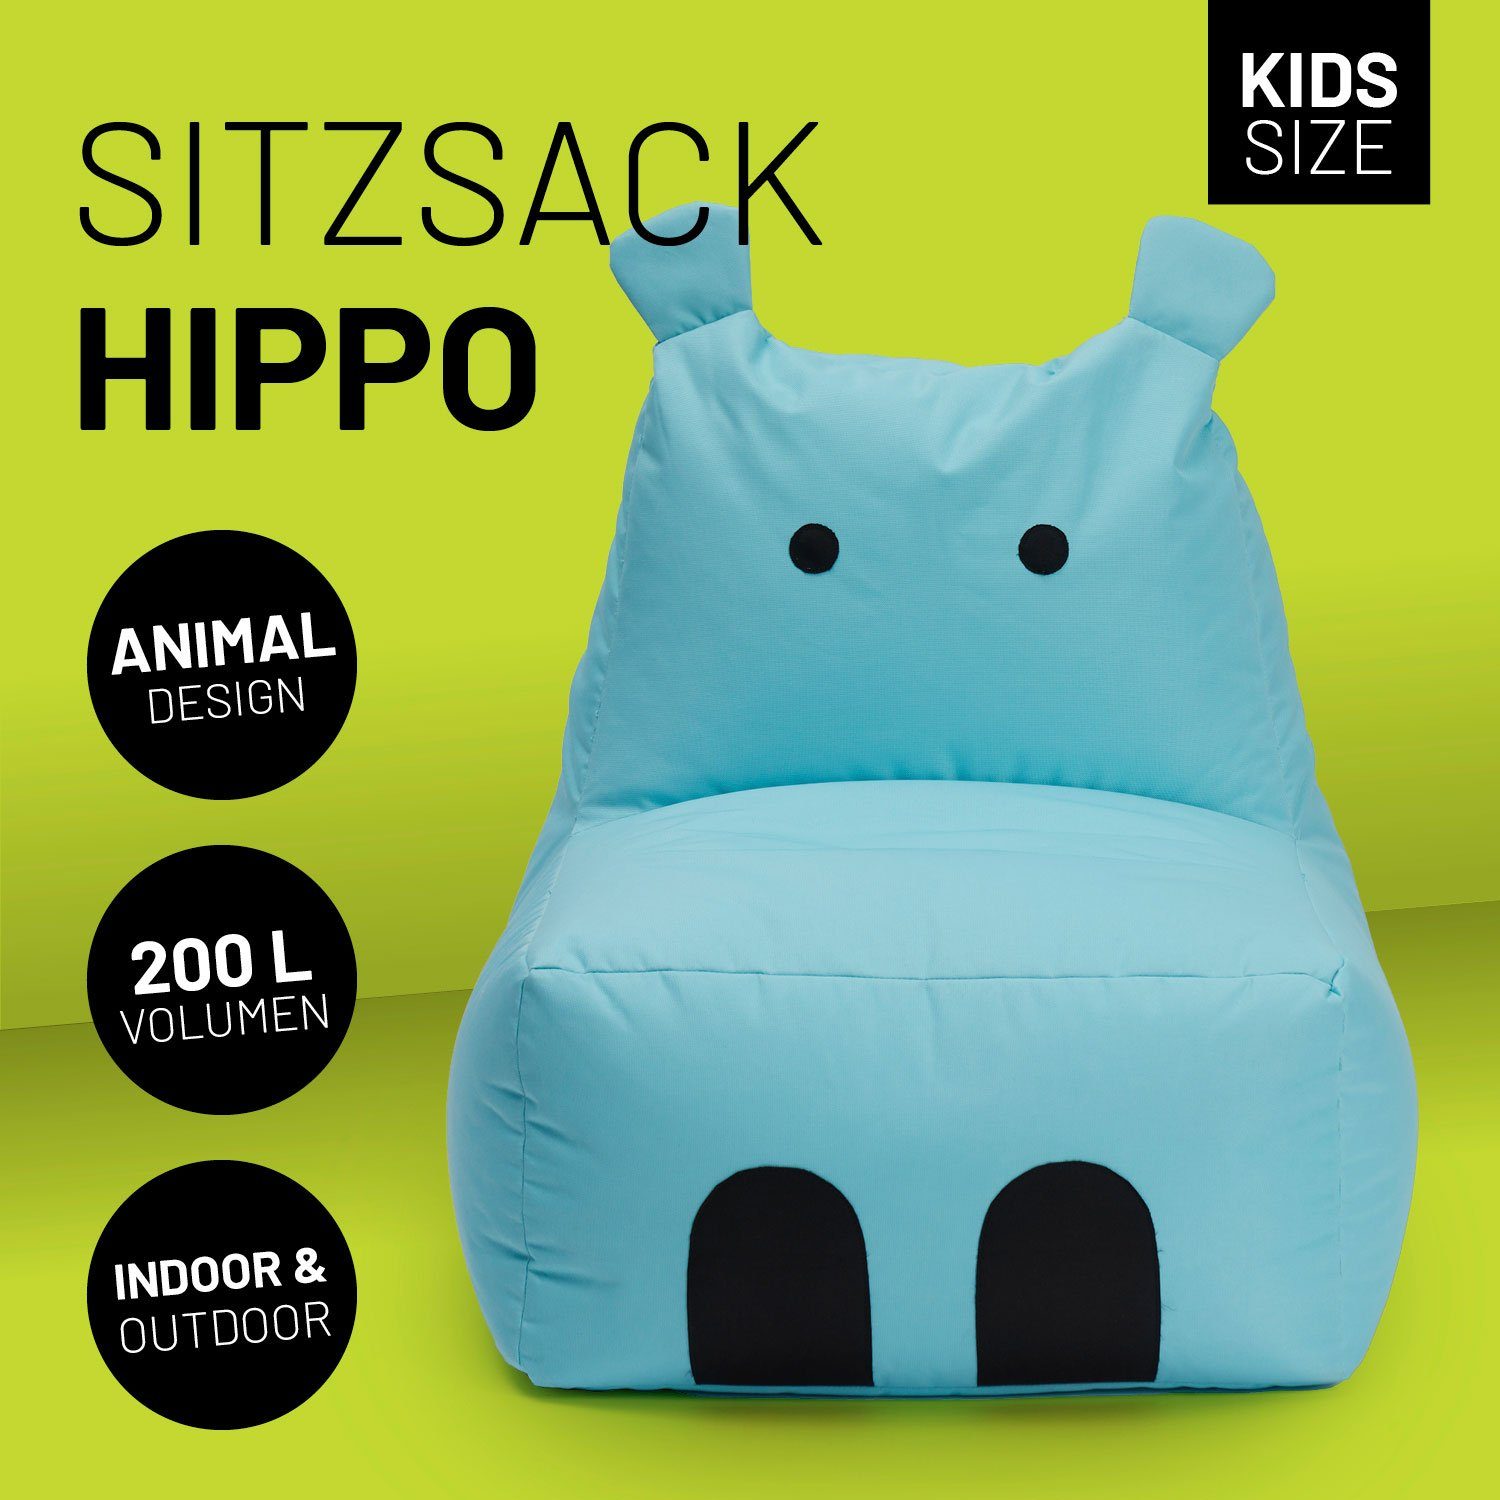 Wohlfühl Kissen Lumaland Sitzsack Türkis Kids, cm 80x70x65 (1x Sitzkissen, Kindersitzsack), Tier Hippo Kinder süßes Motiv, pflegeleicht